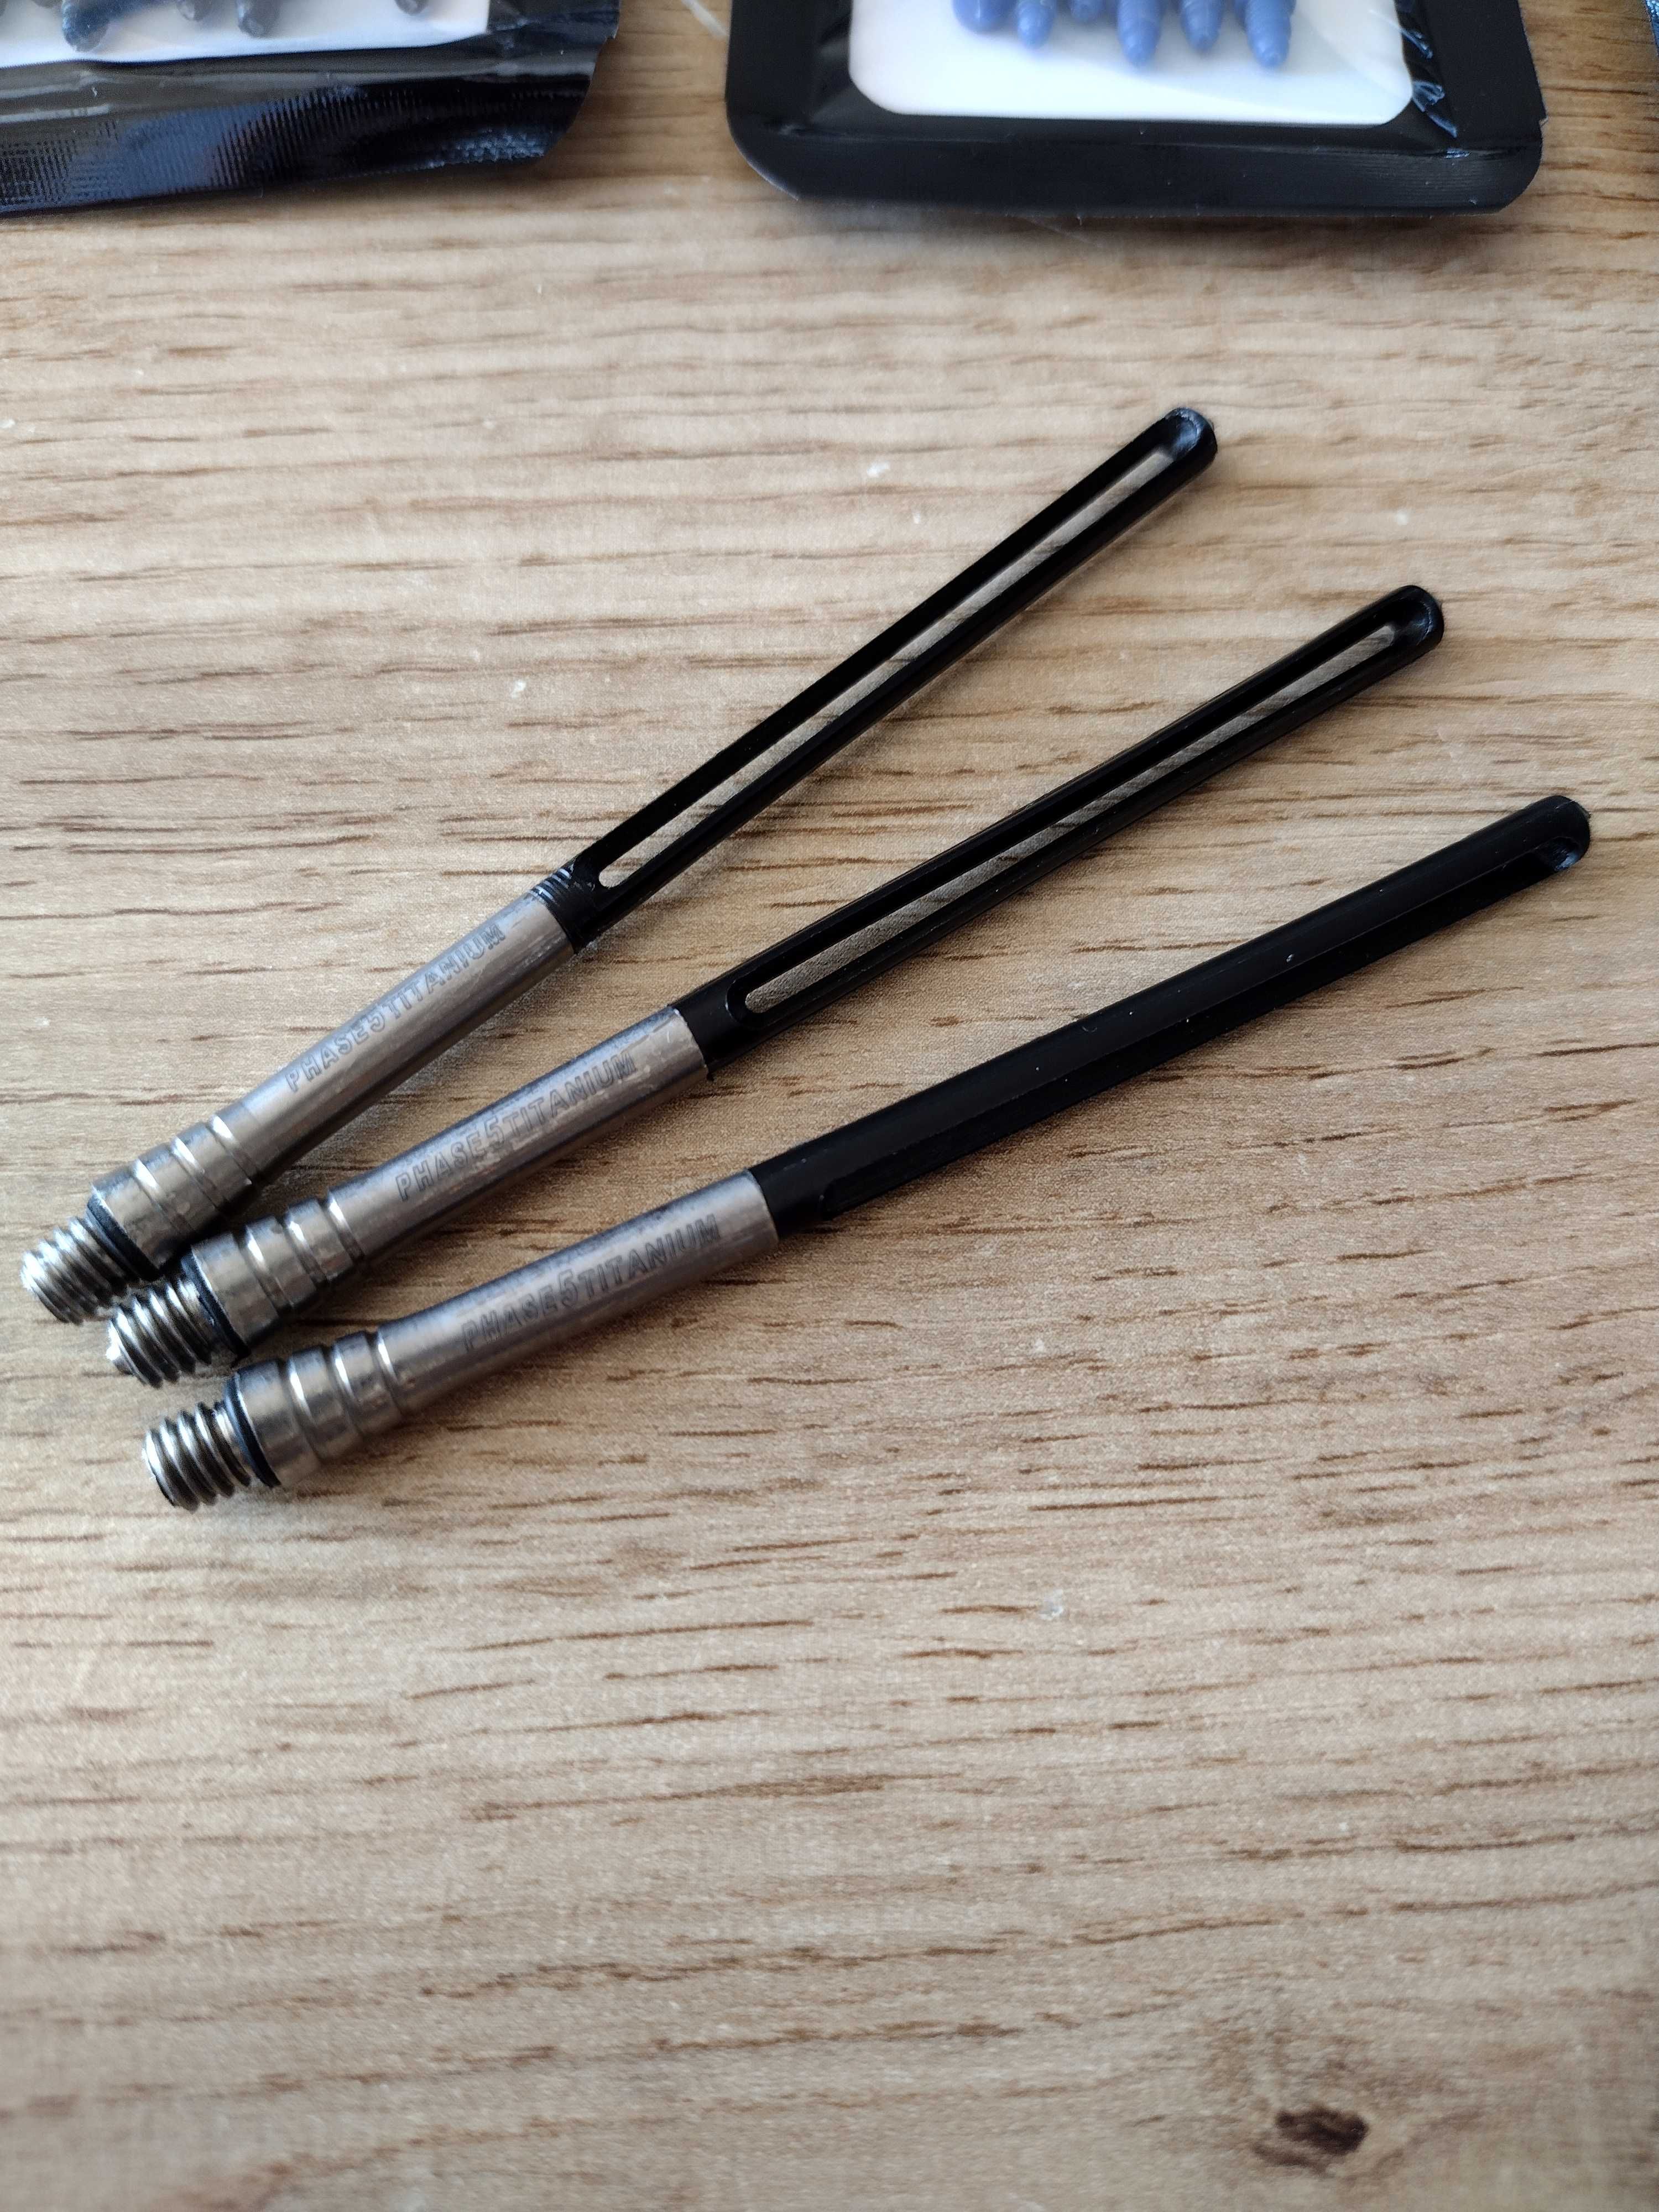 ZESTAW Unicorn Slikstik/Phase 5/Sigma, shafty, steel tip darts